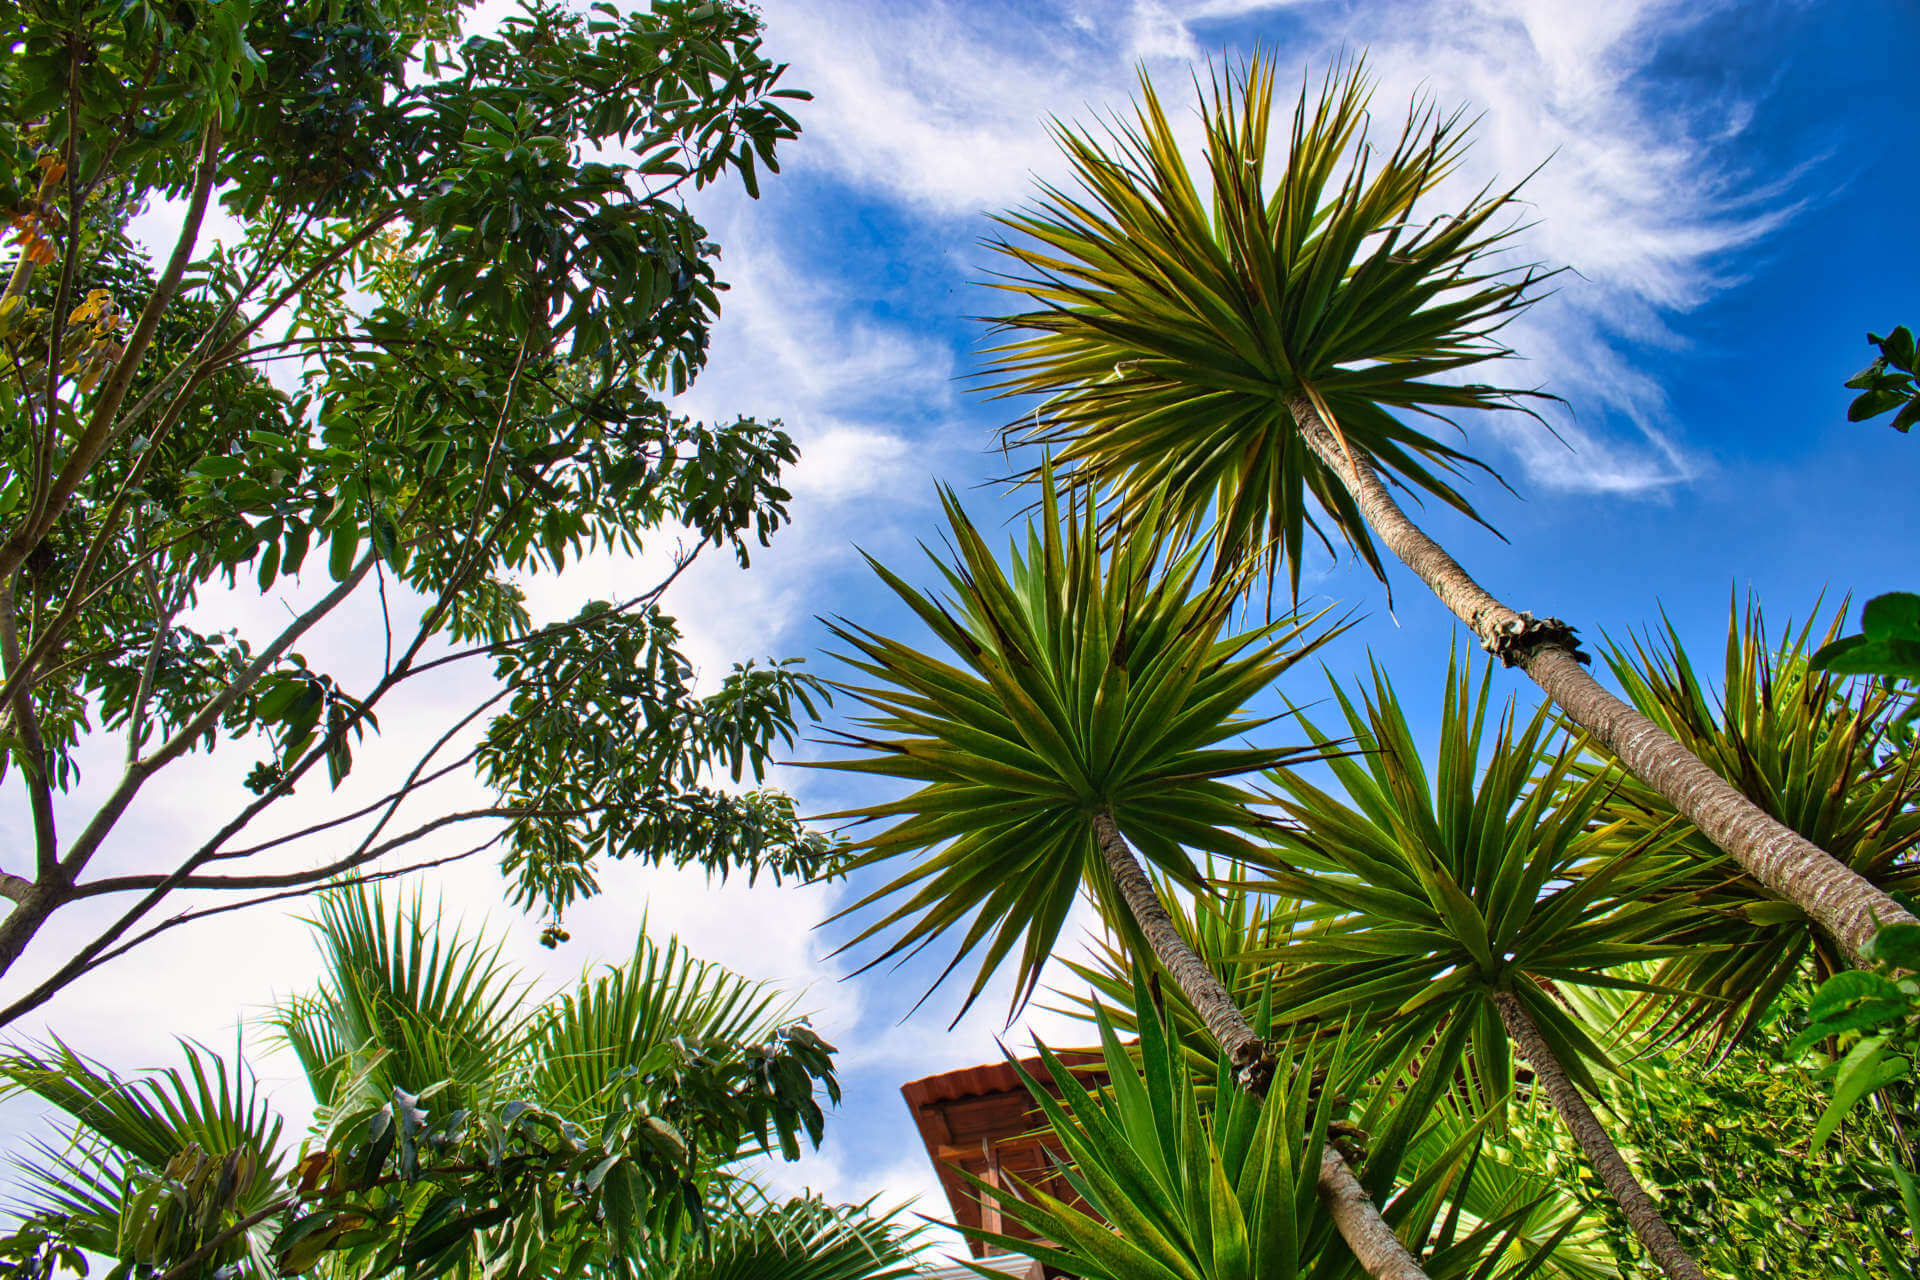 The Casa Lobo Bungalows garden is located in San Pedro la Laguna at the Lake Atitlán in Guatemala.